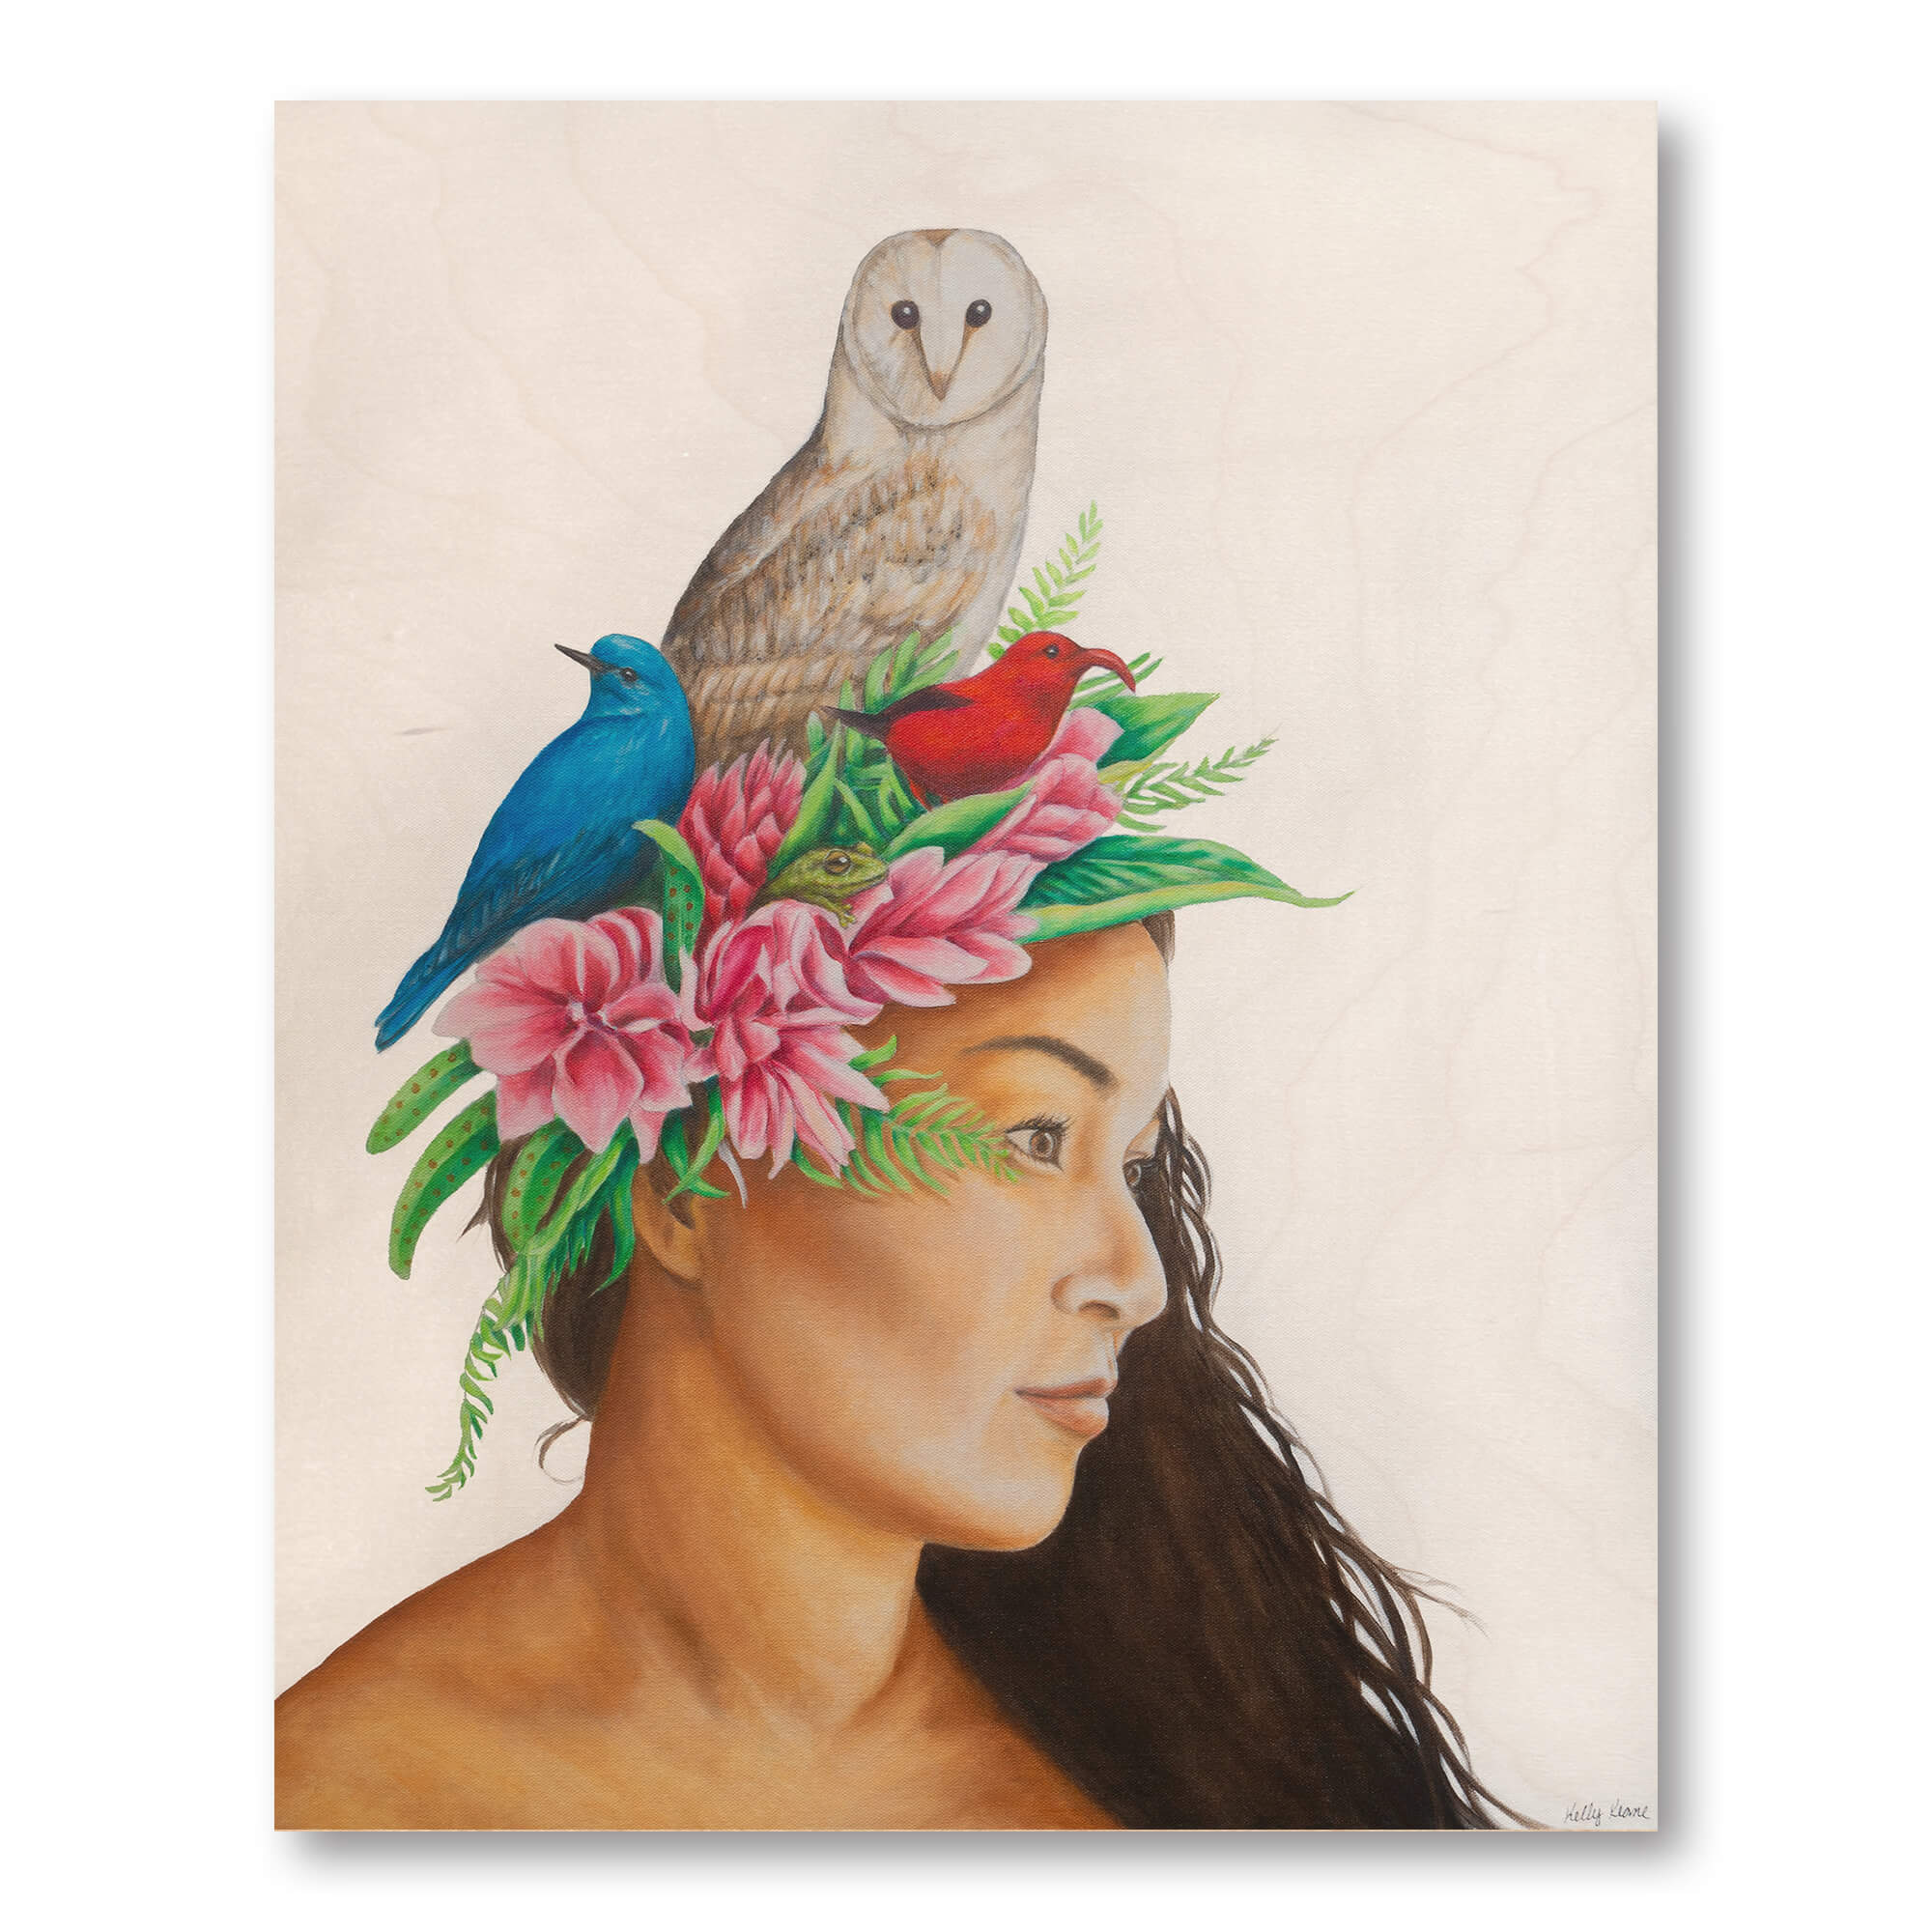 Birch wood print a local Hawaiian woman with a lei on her head by Hawaii artist Kelly Keane